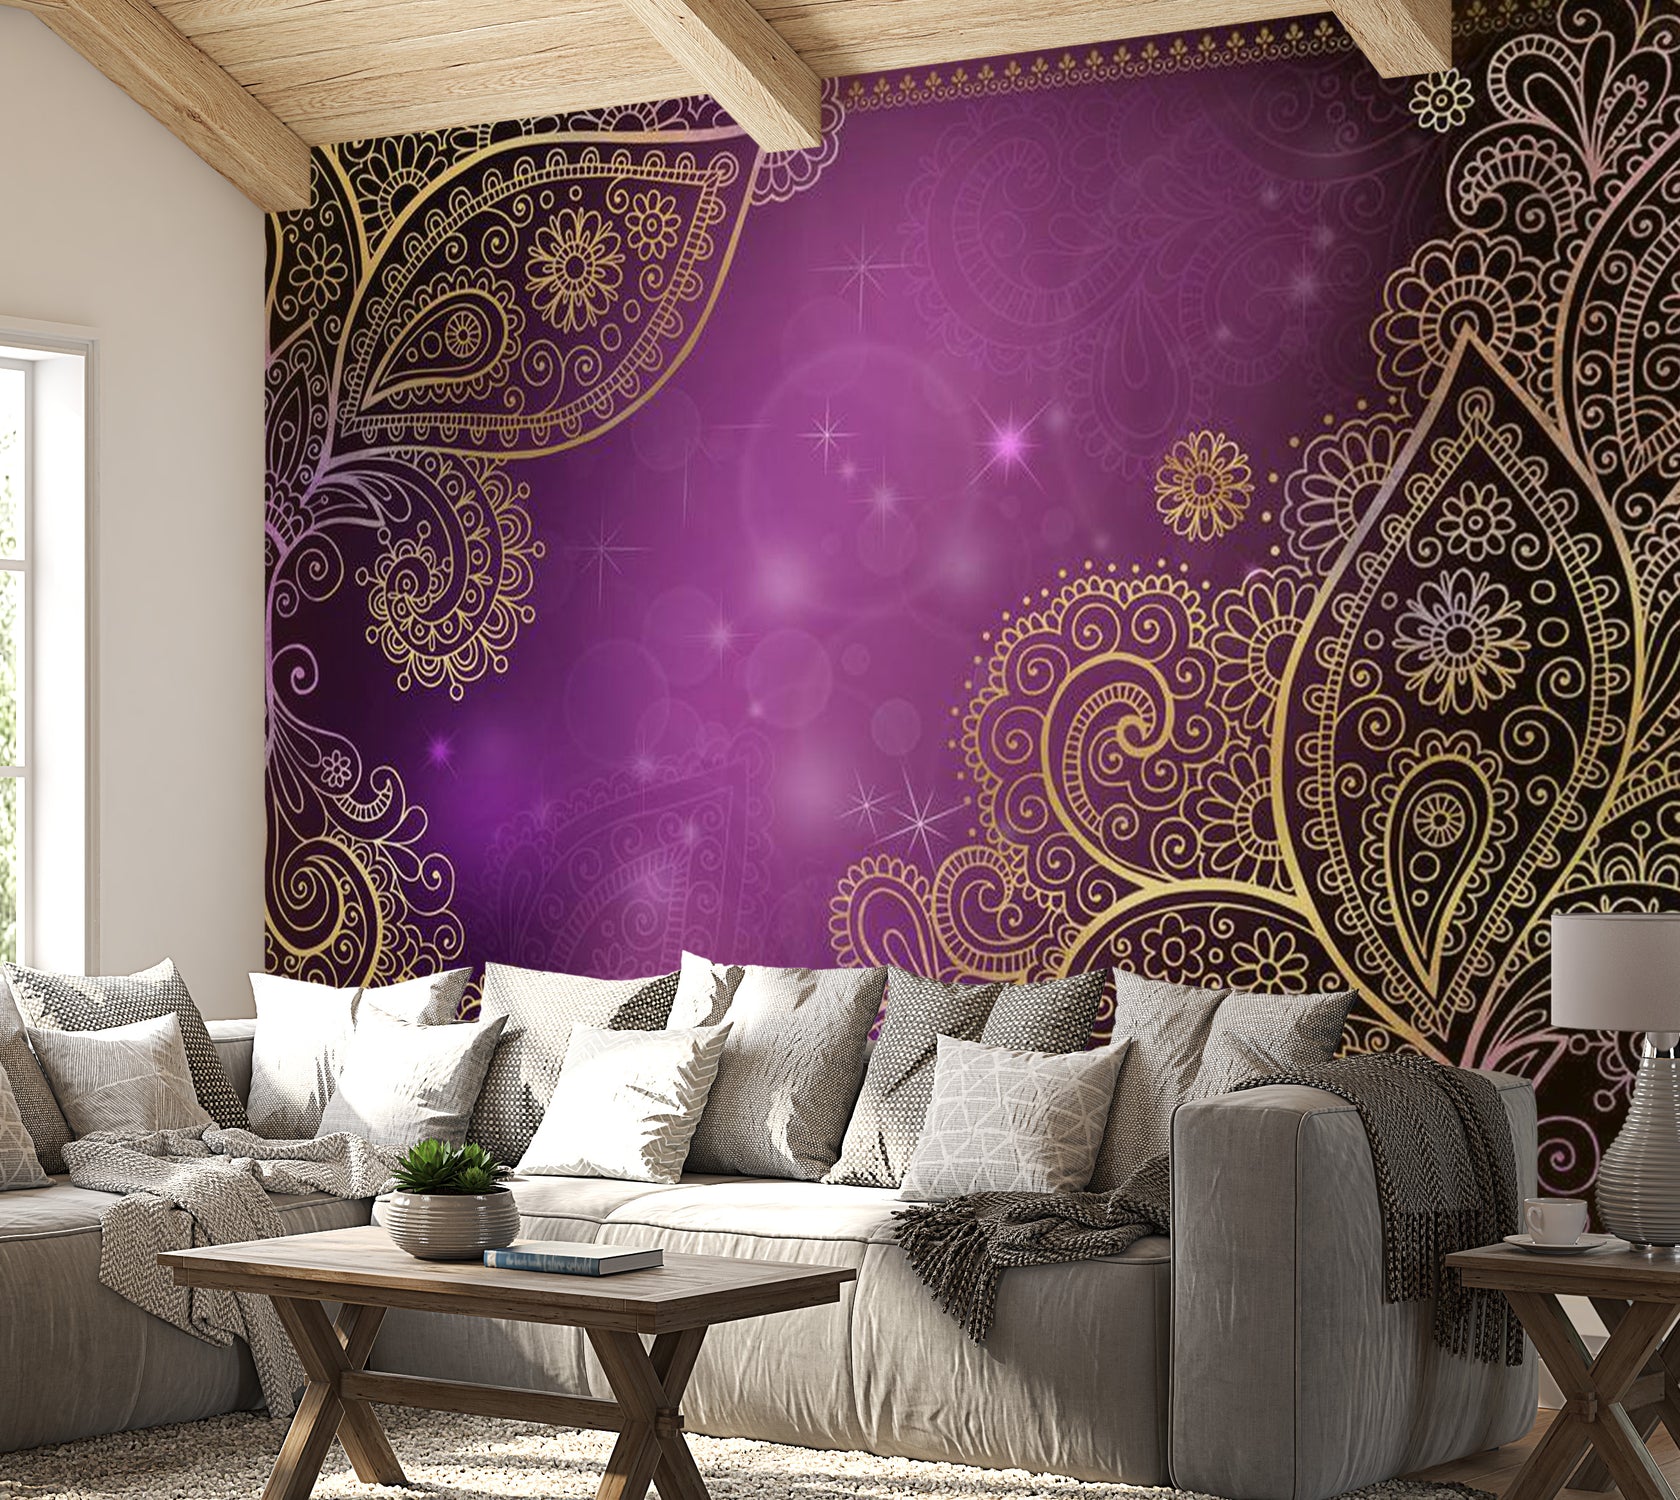 Peel & Stick Mandala Wall Mural - Oriental Purple Mandala - Removable Wall Decals